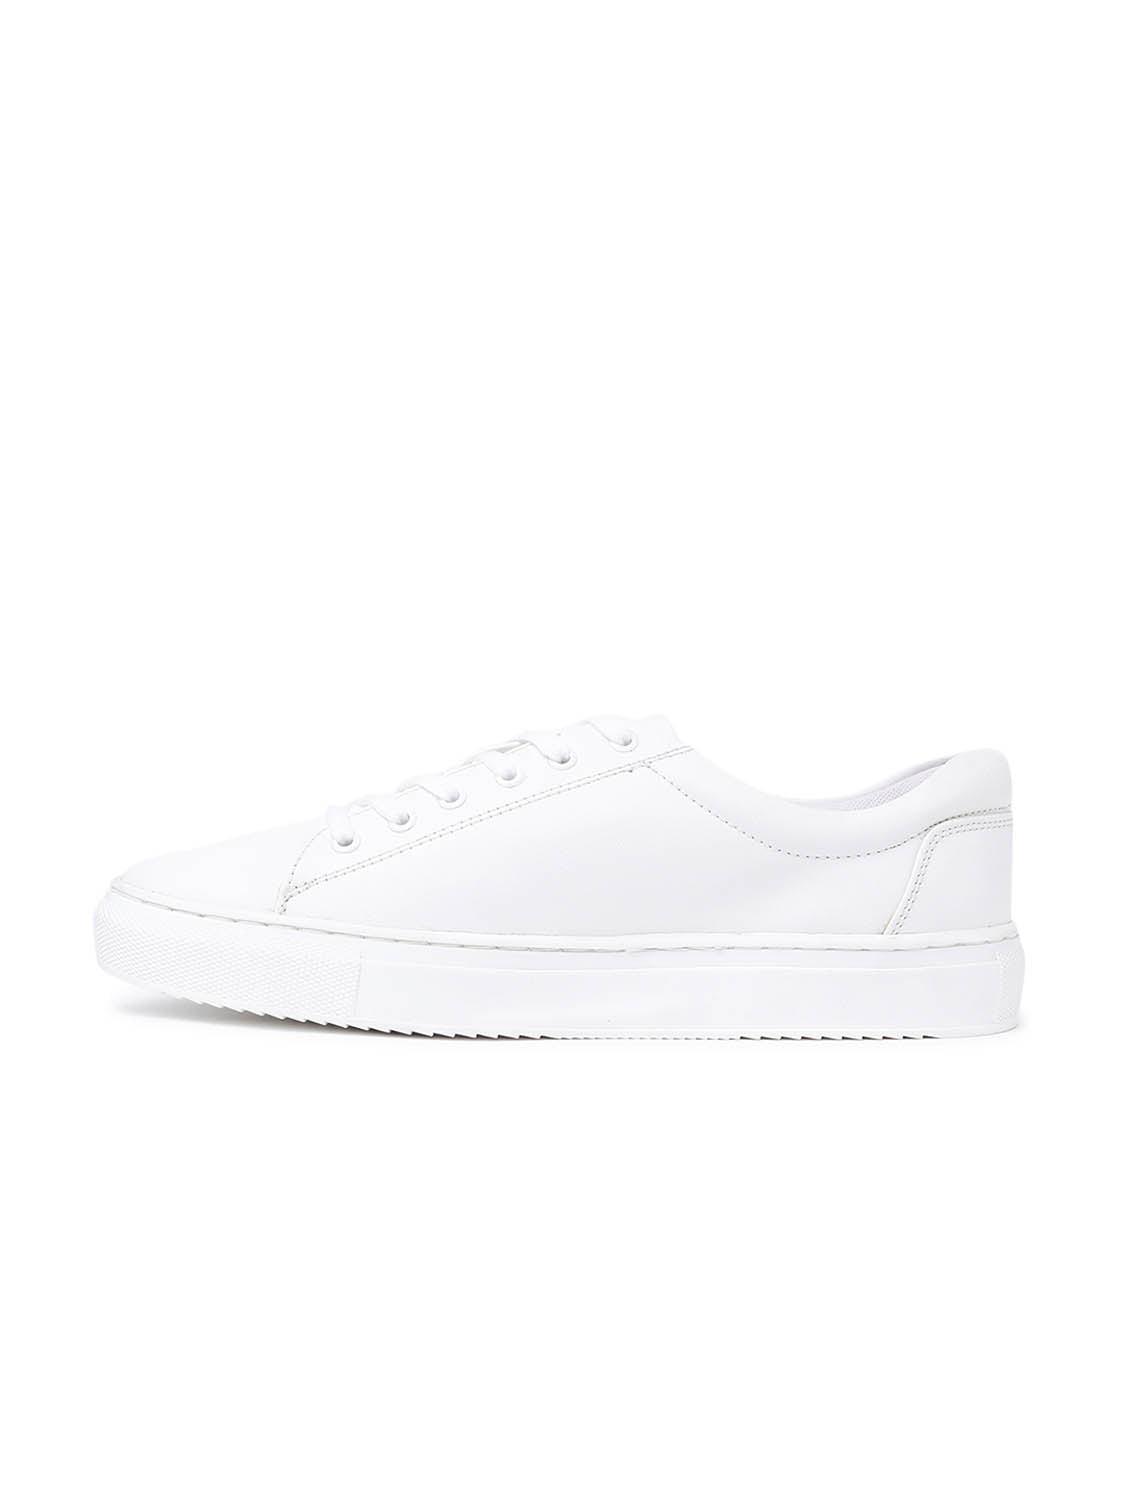 Eeken Sneakers For Men (White)